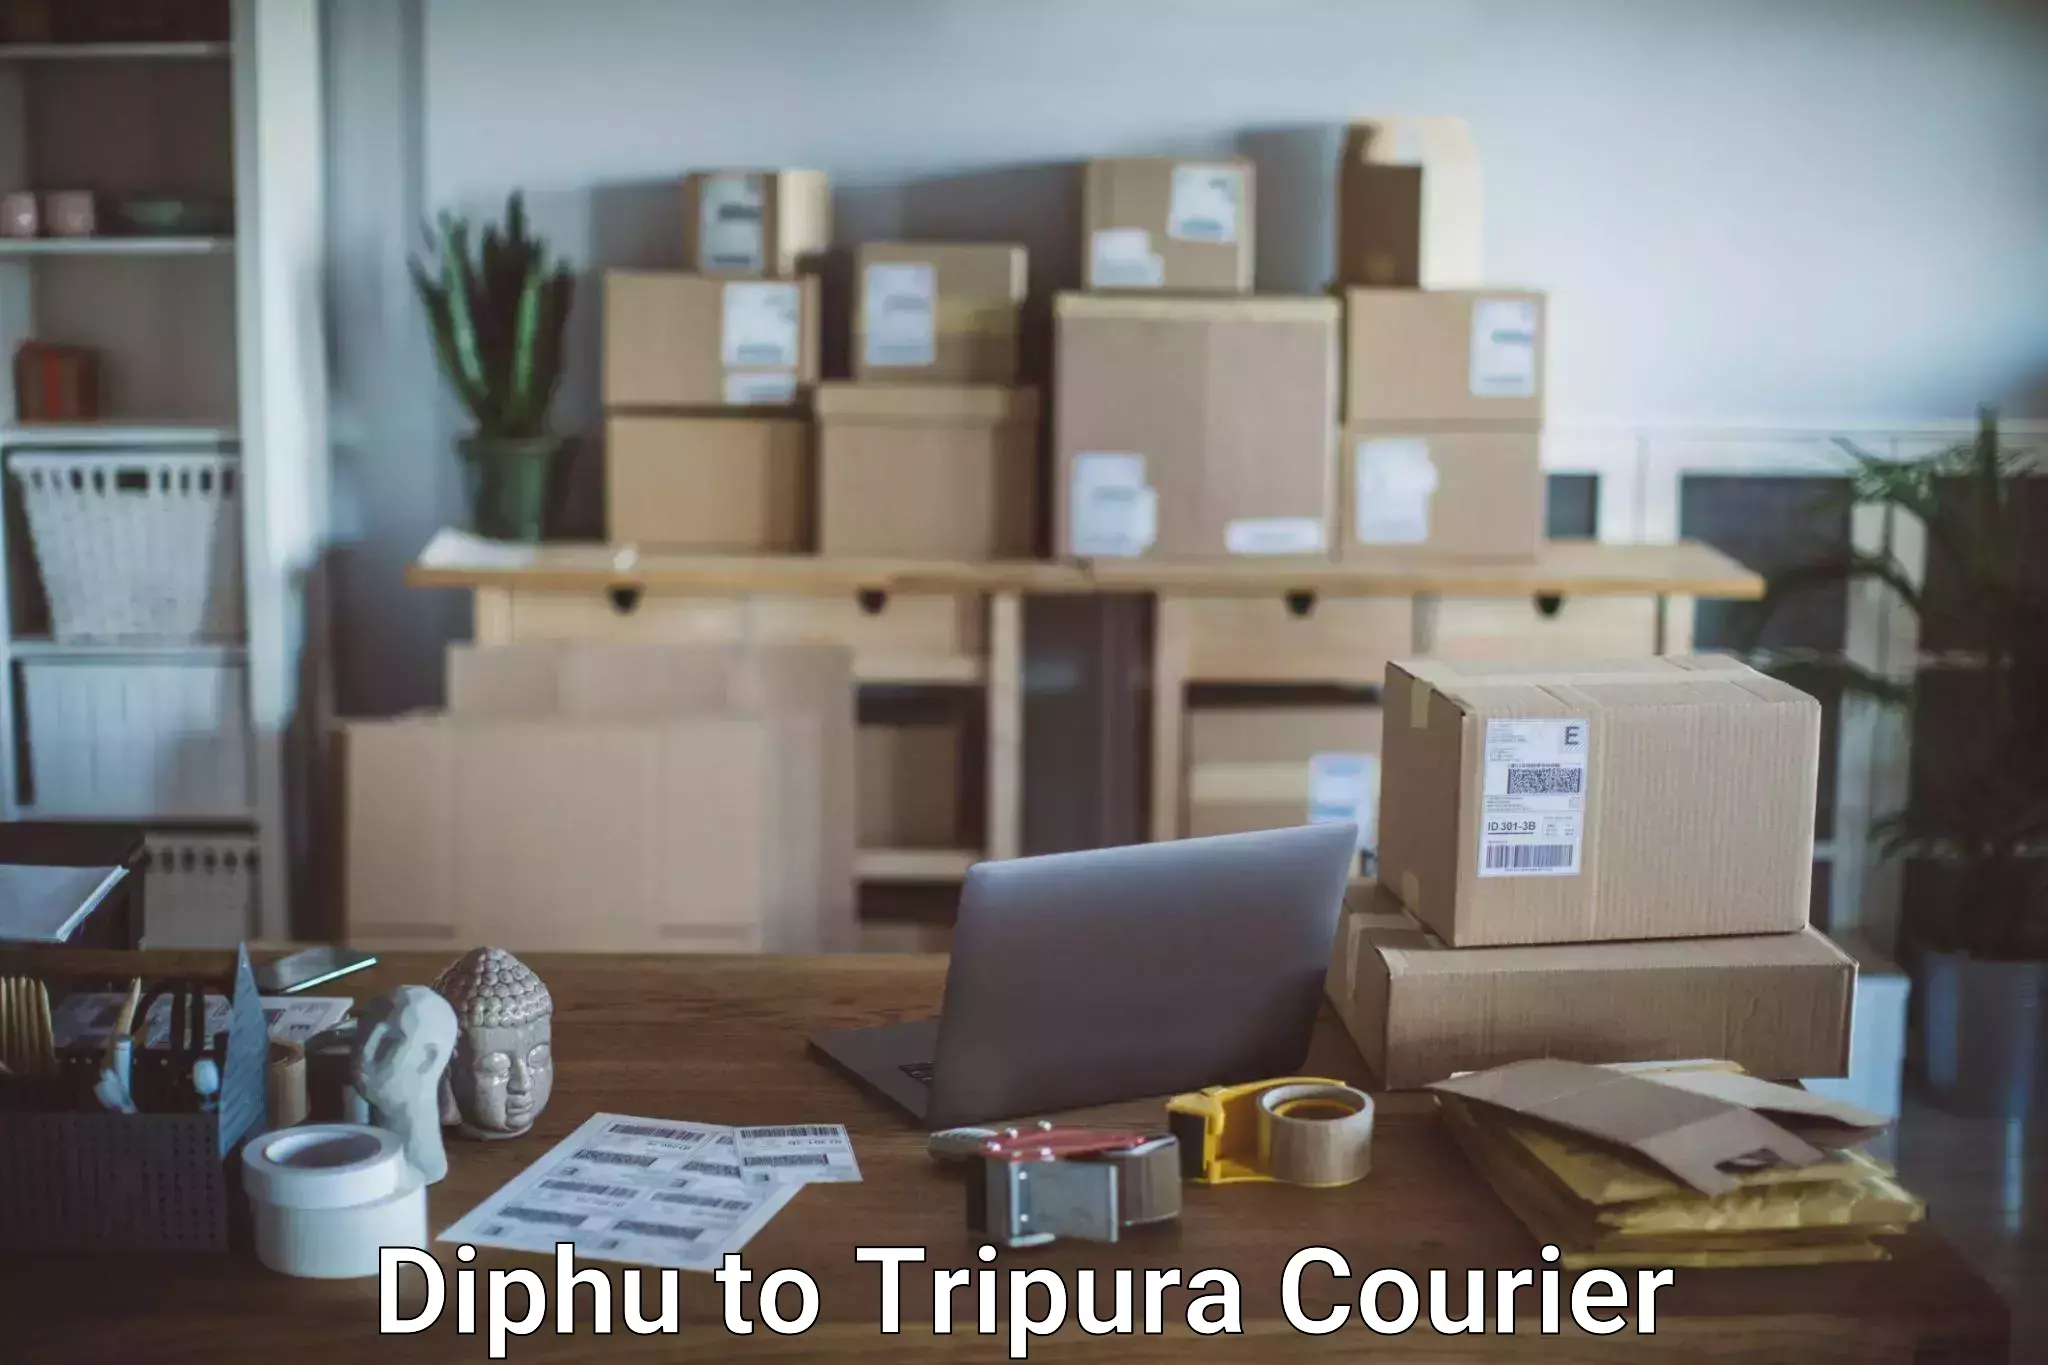 Baggage transport network Diphu to Udaipur Tripura